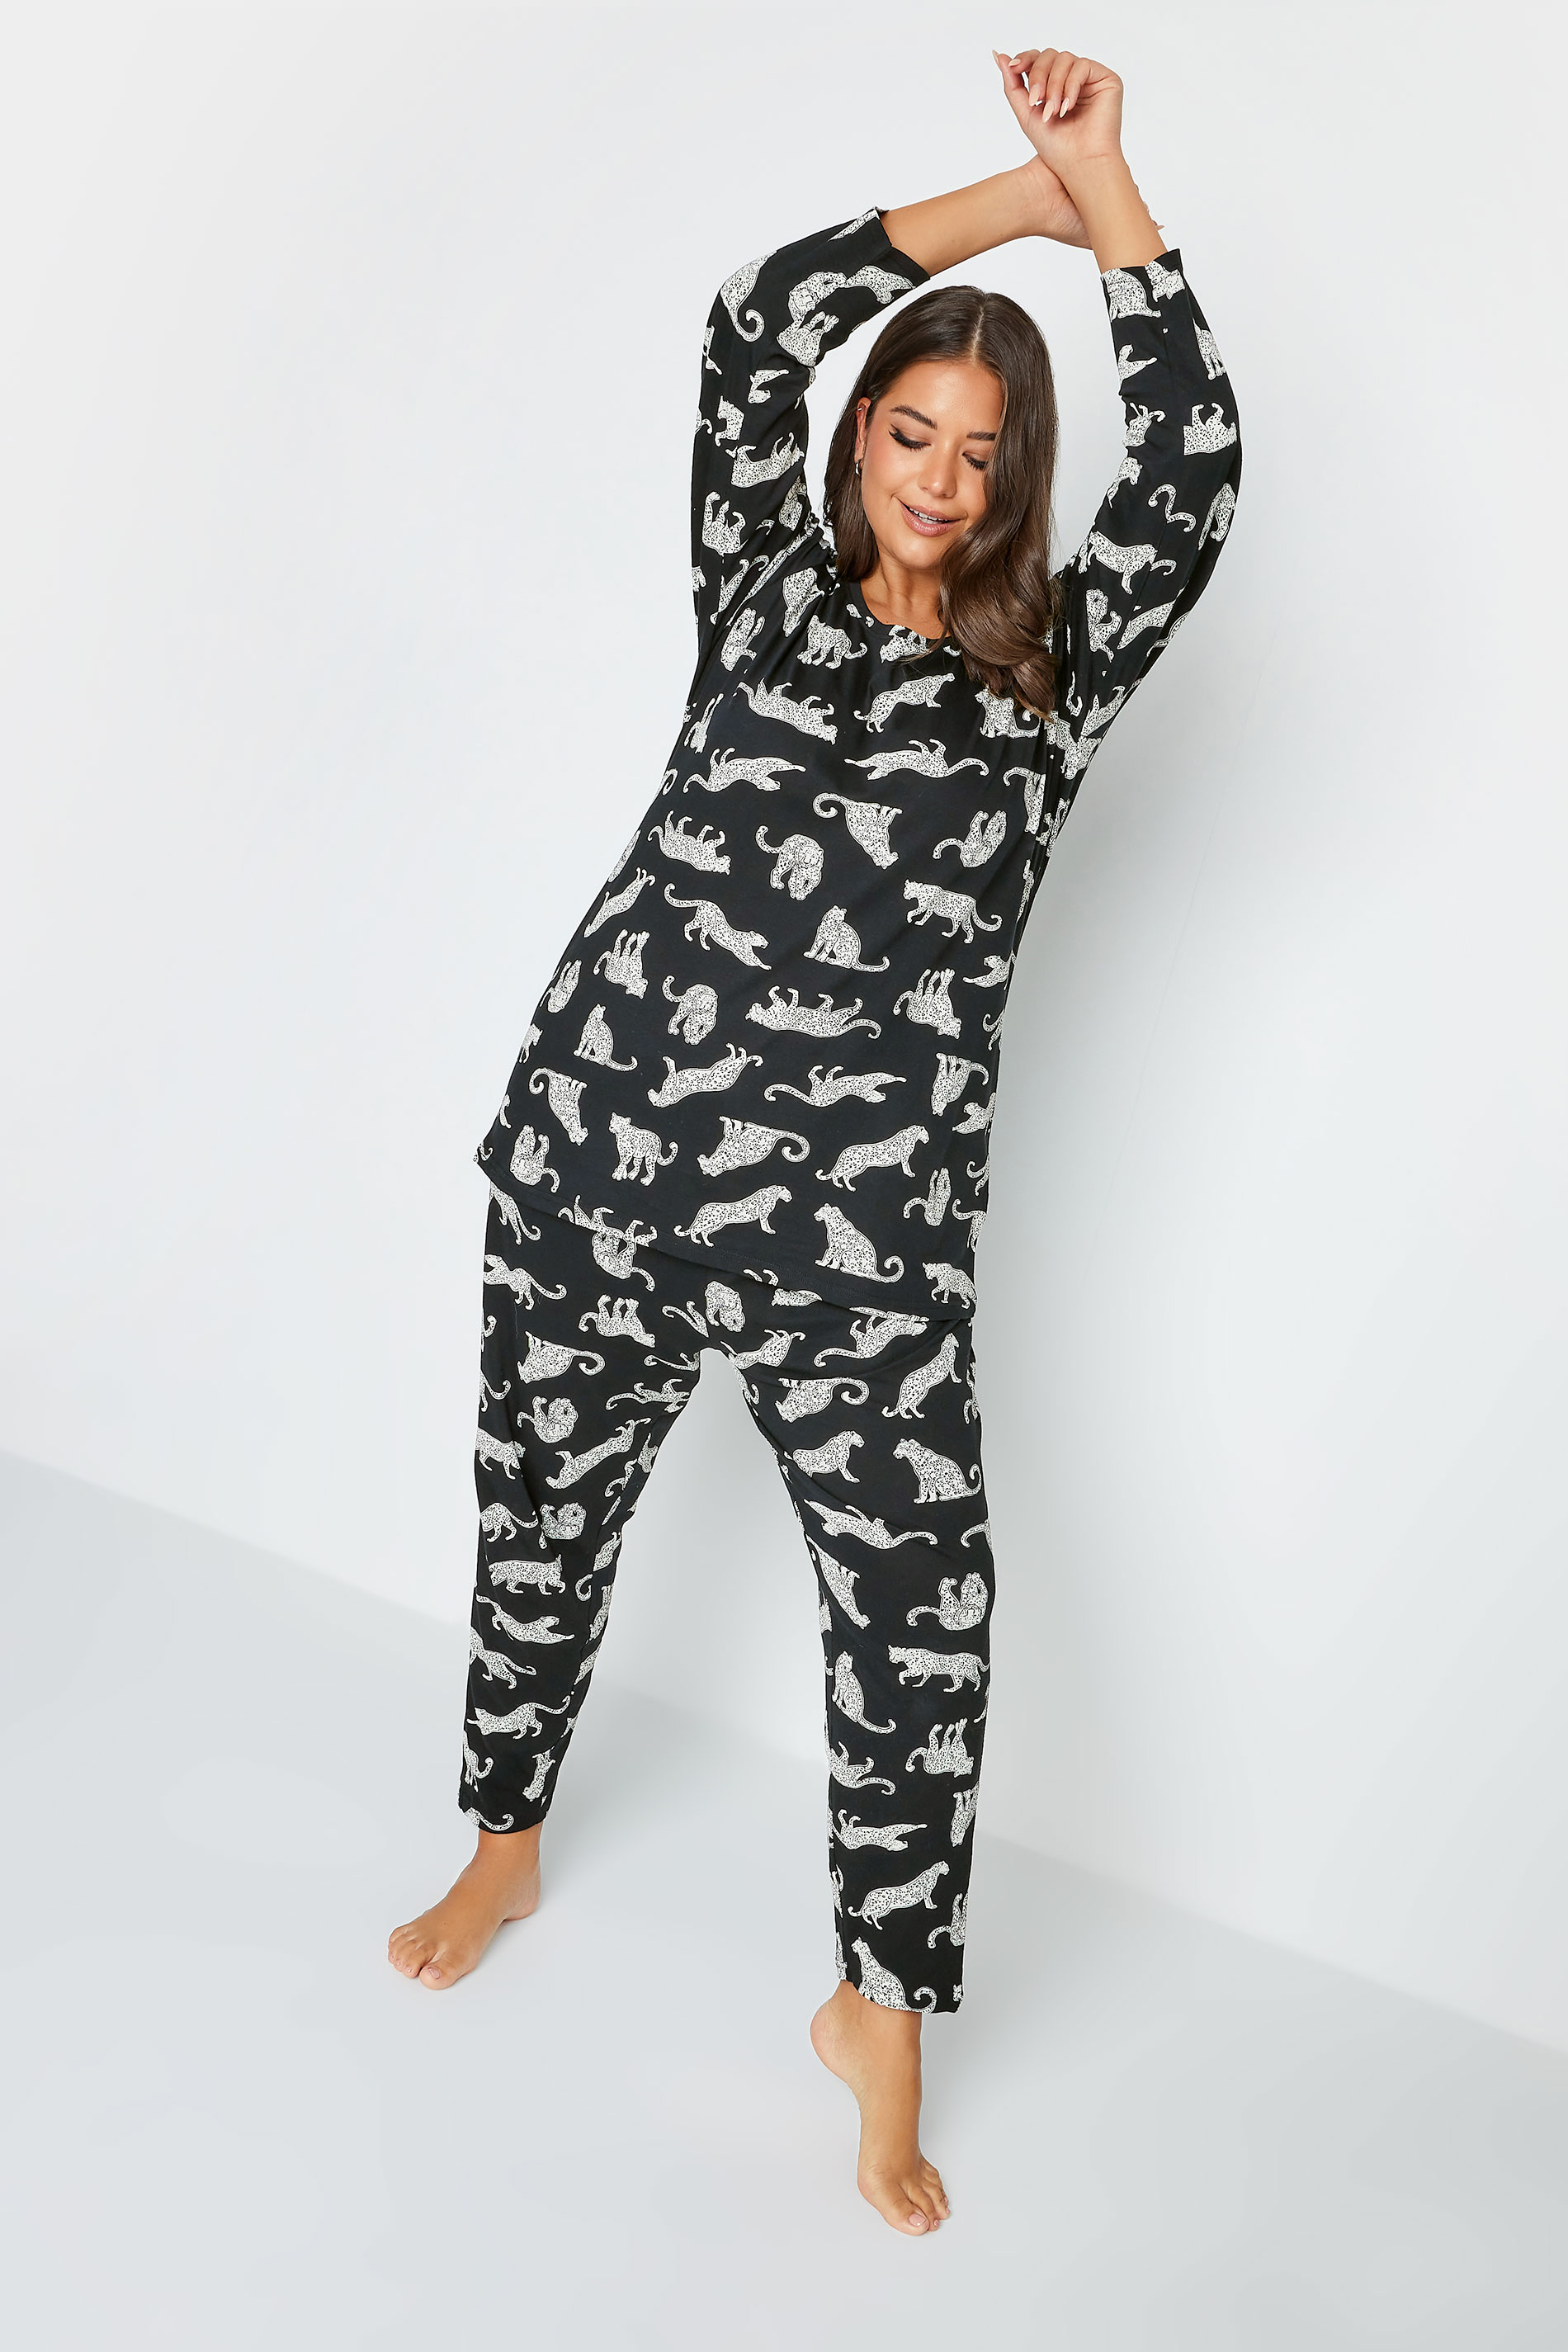 YOURS Curve Black Animal Print Pyjama Set | Yours Clothing 2